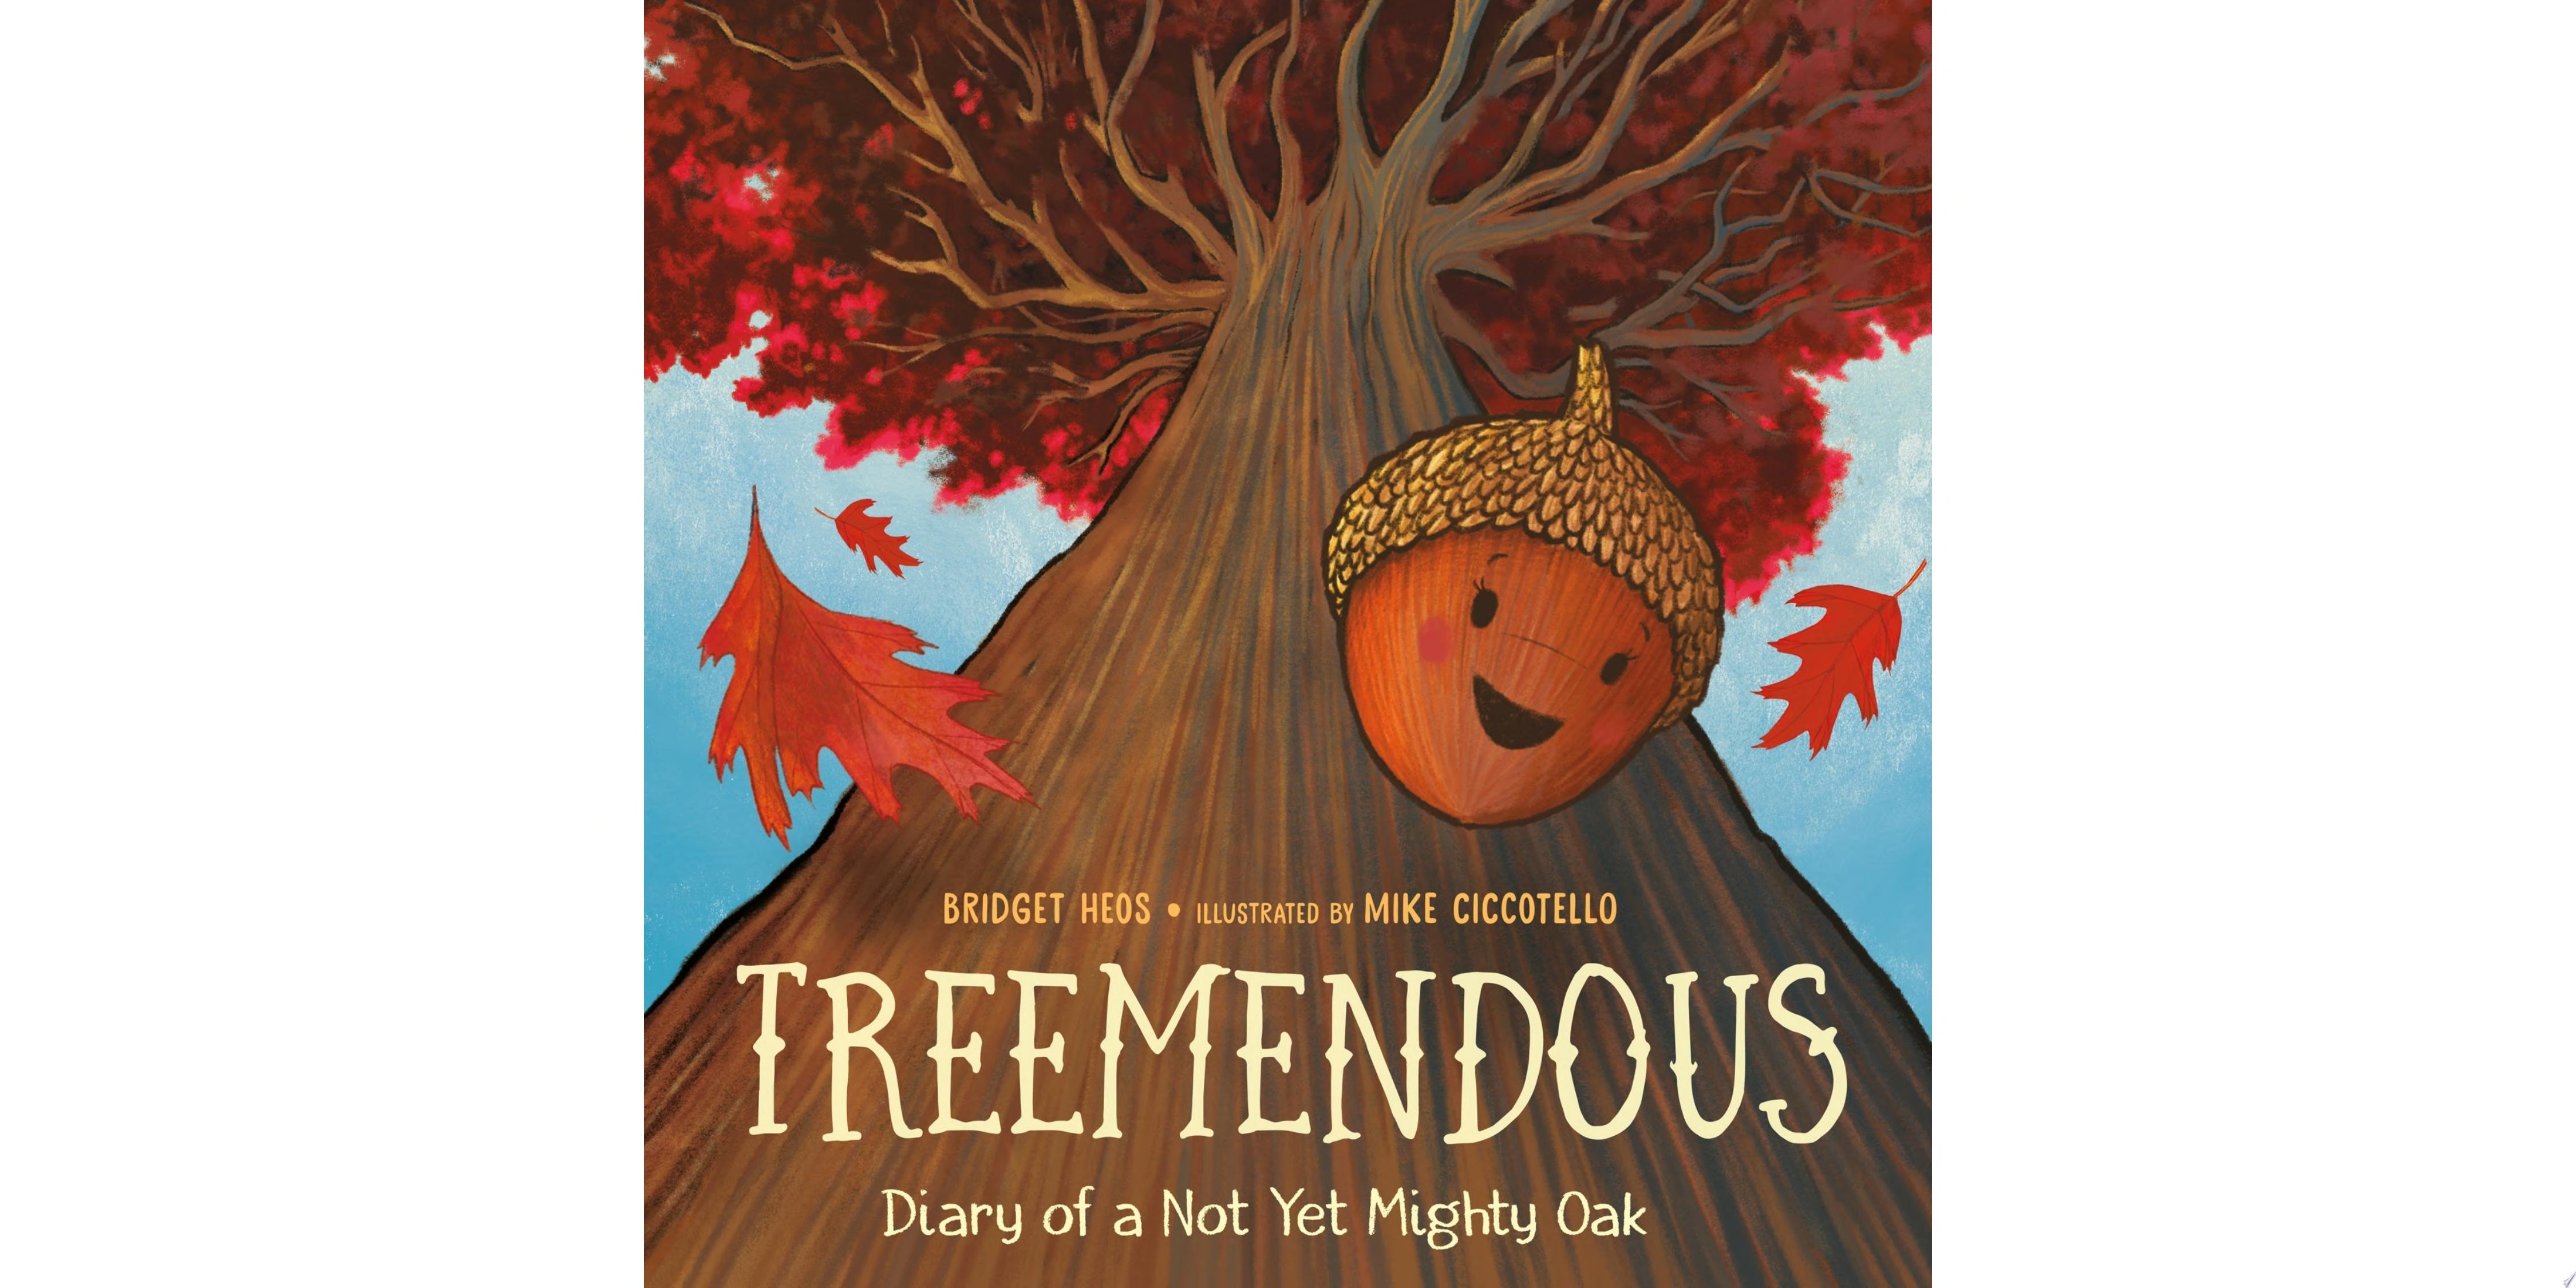 Image for "Treemendous"